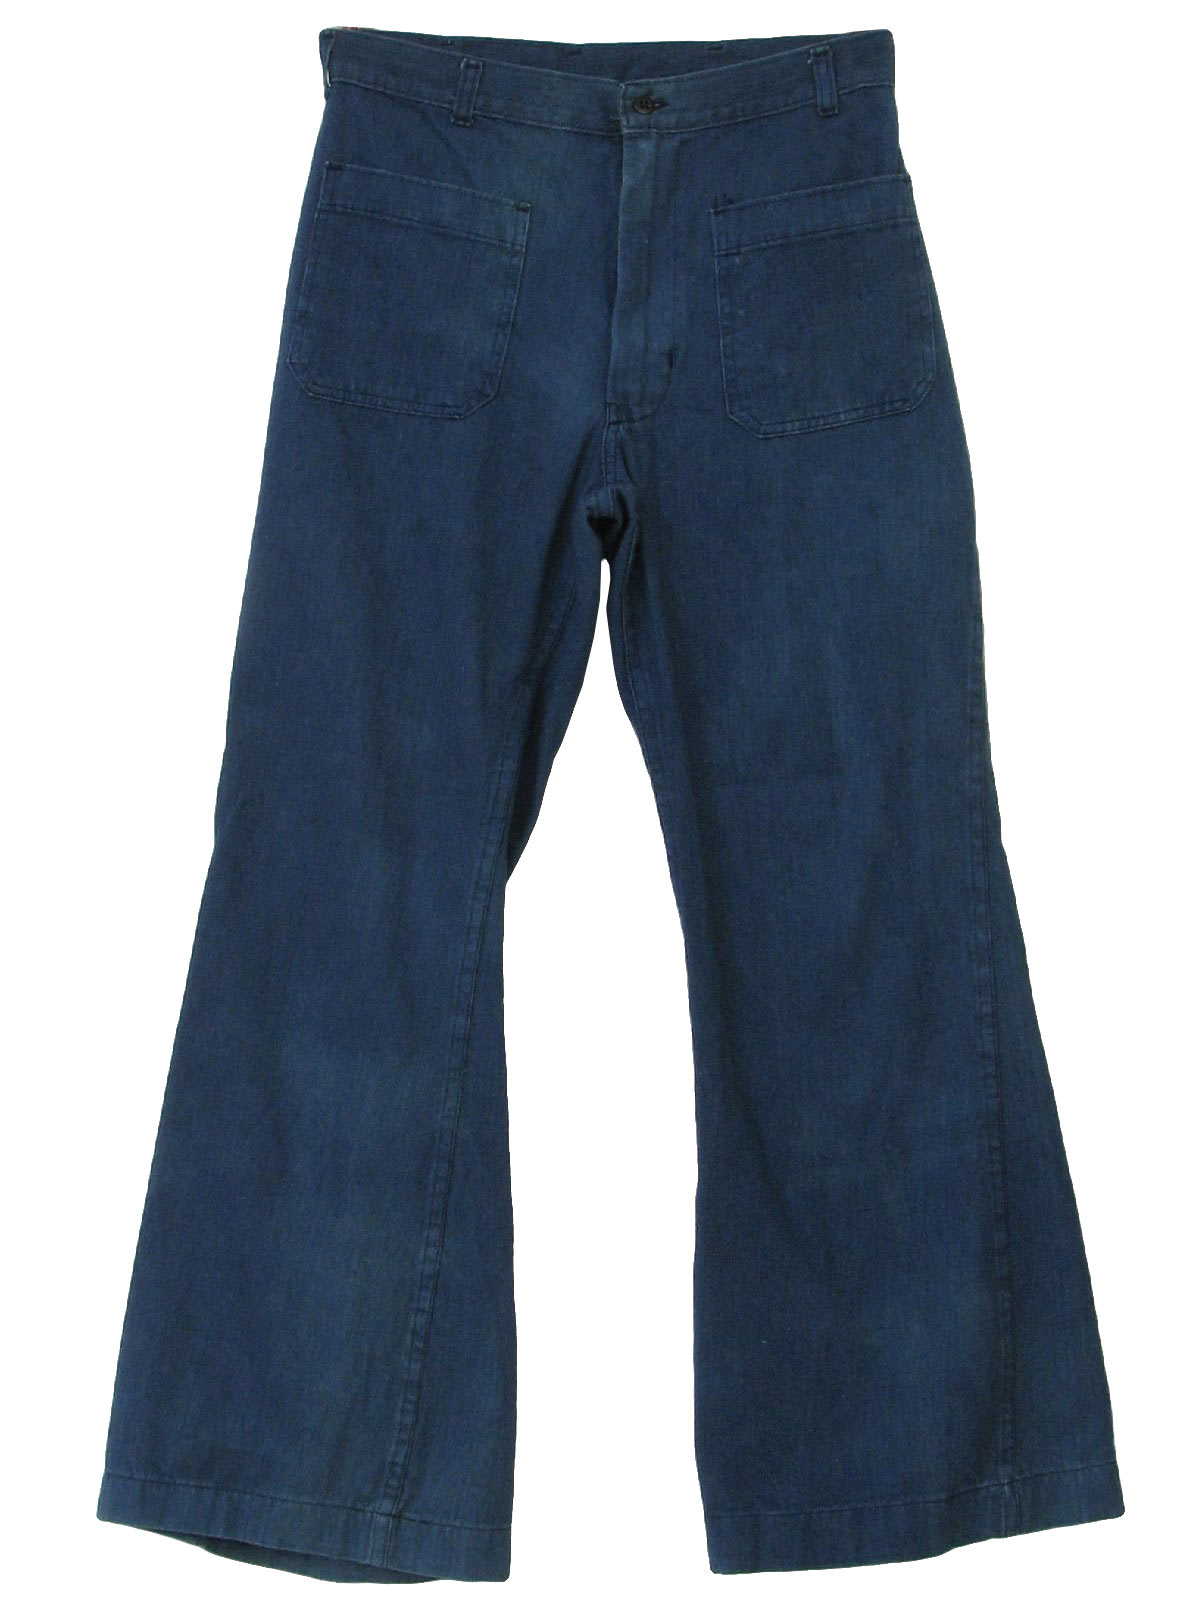 1970's Retro Bellbottom Pants: 70s -Wilsew Inc.- Mens denim blue ...